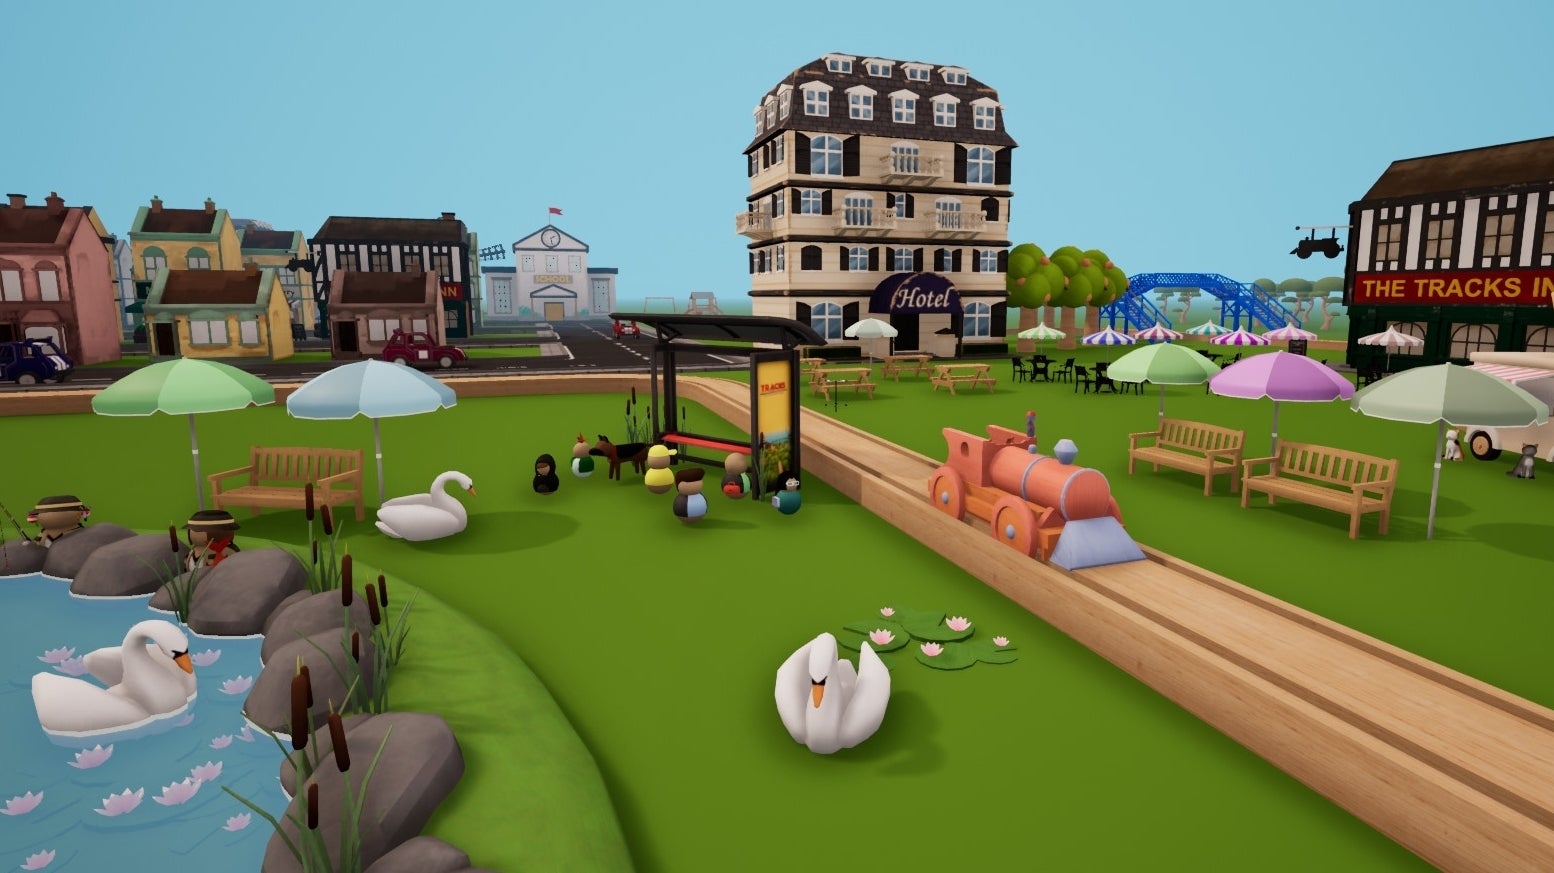 Image for Adorable train set sandbox Tracks gets free suburban-themed expansion